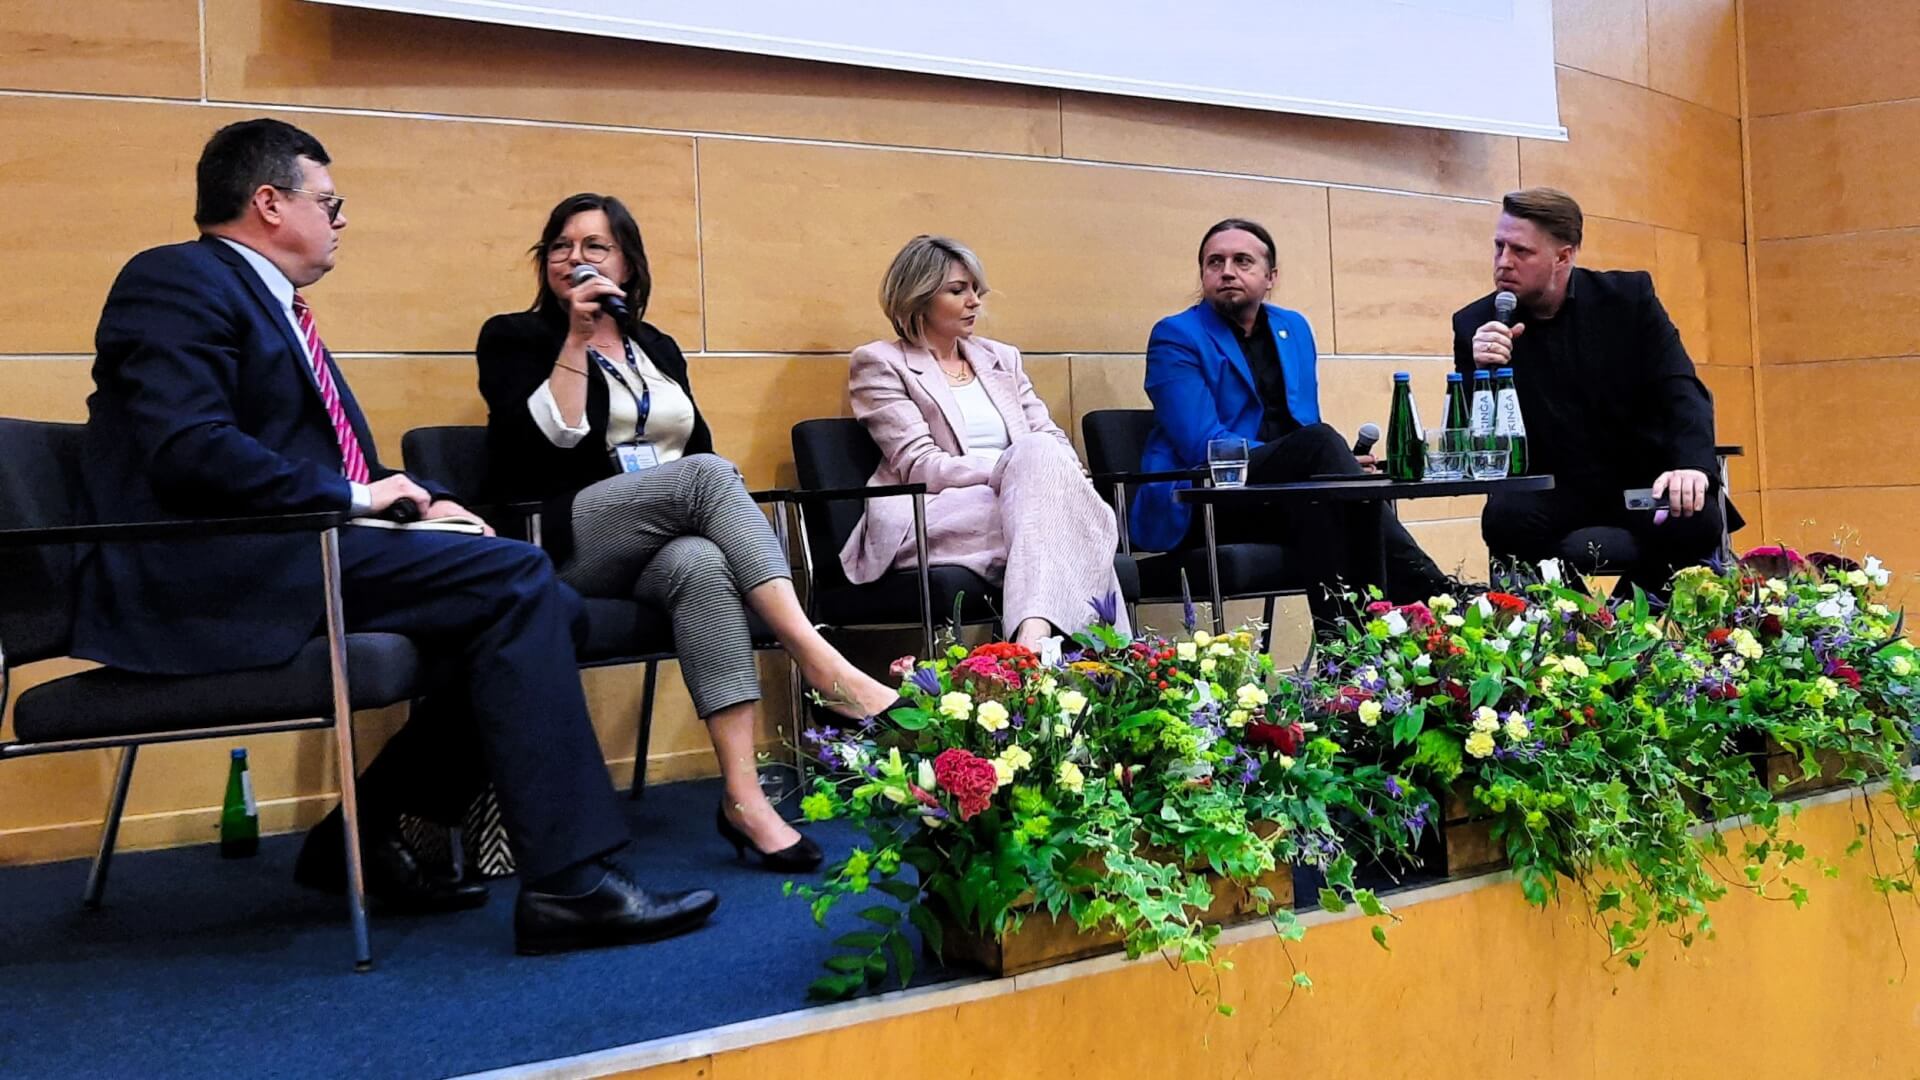 Od lewej: dr hab. Krystian Markiewicz, dr hab. Agata Twardoch, Monika Rosa, Łukasz Kohut, Marcin Zasada